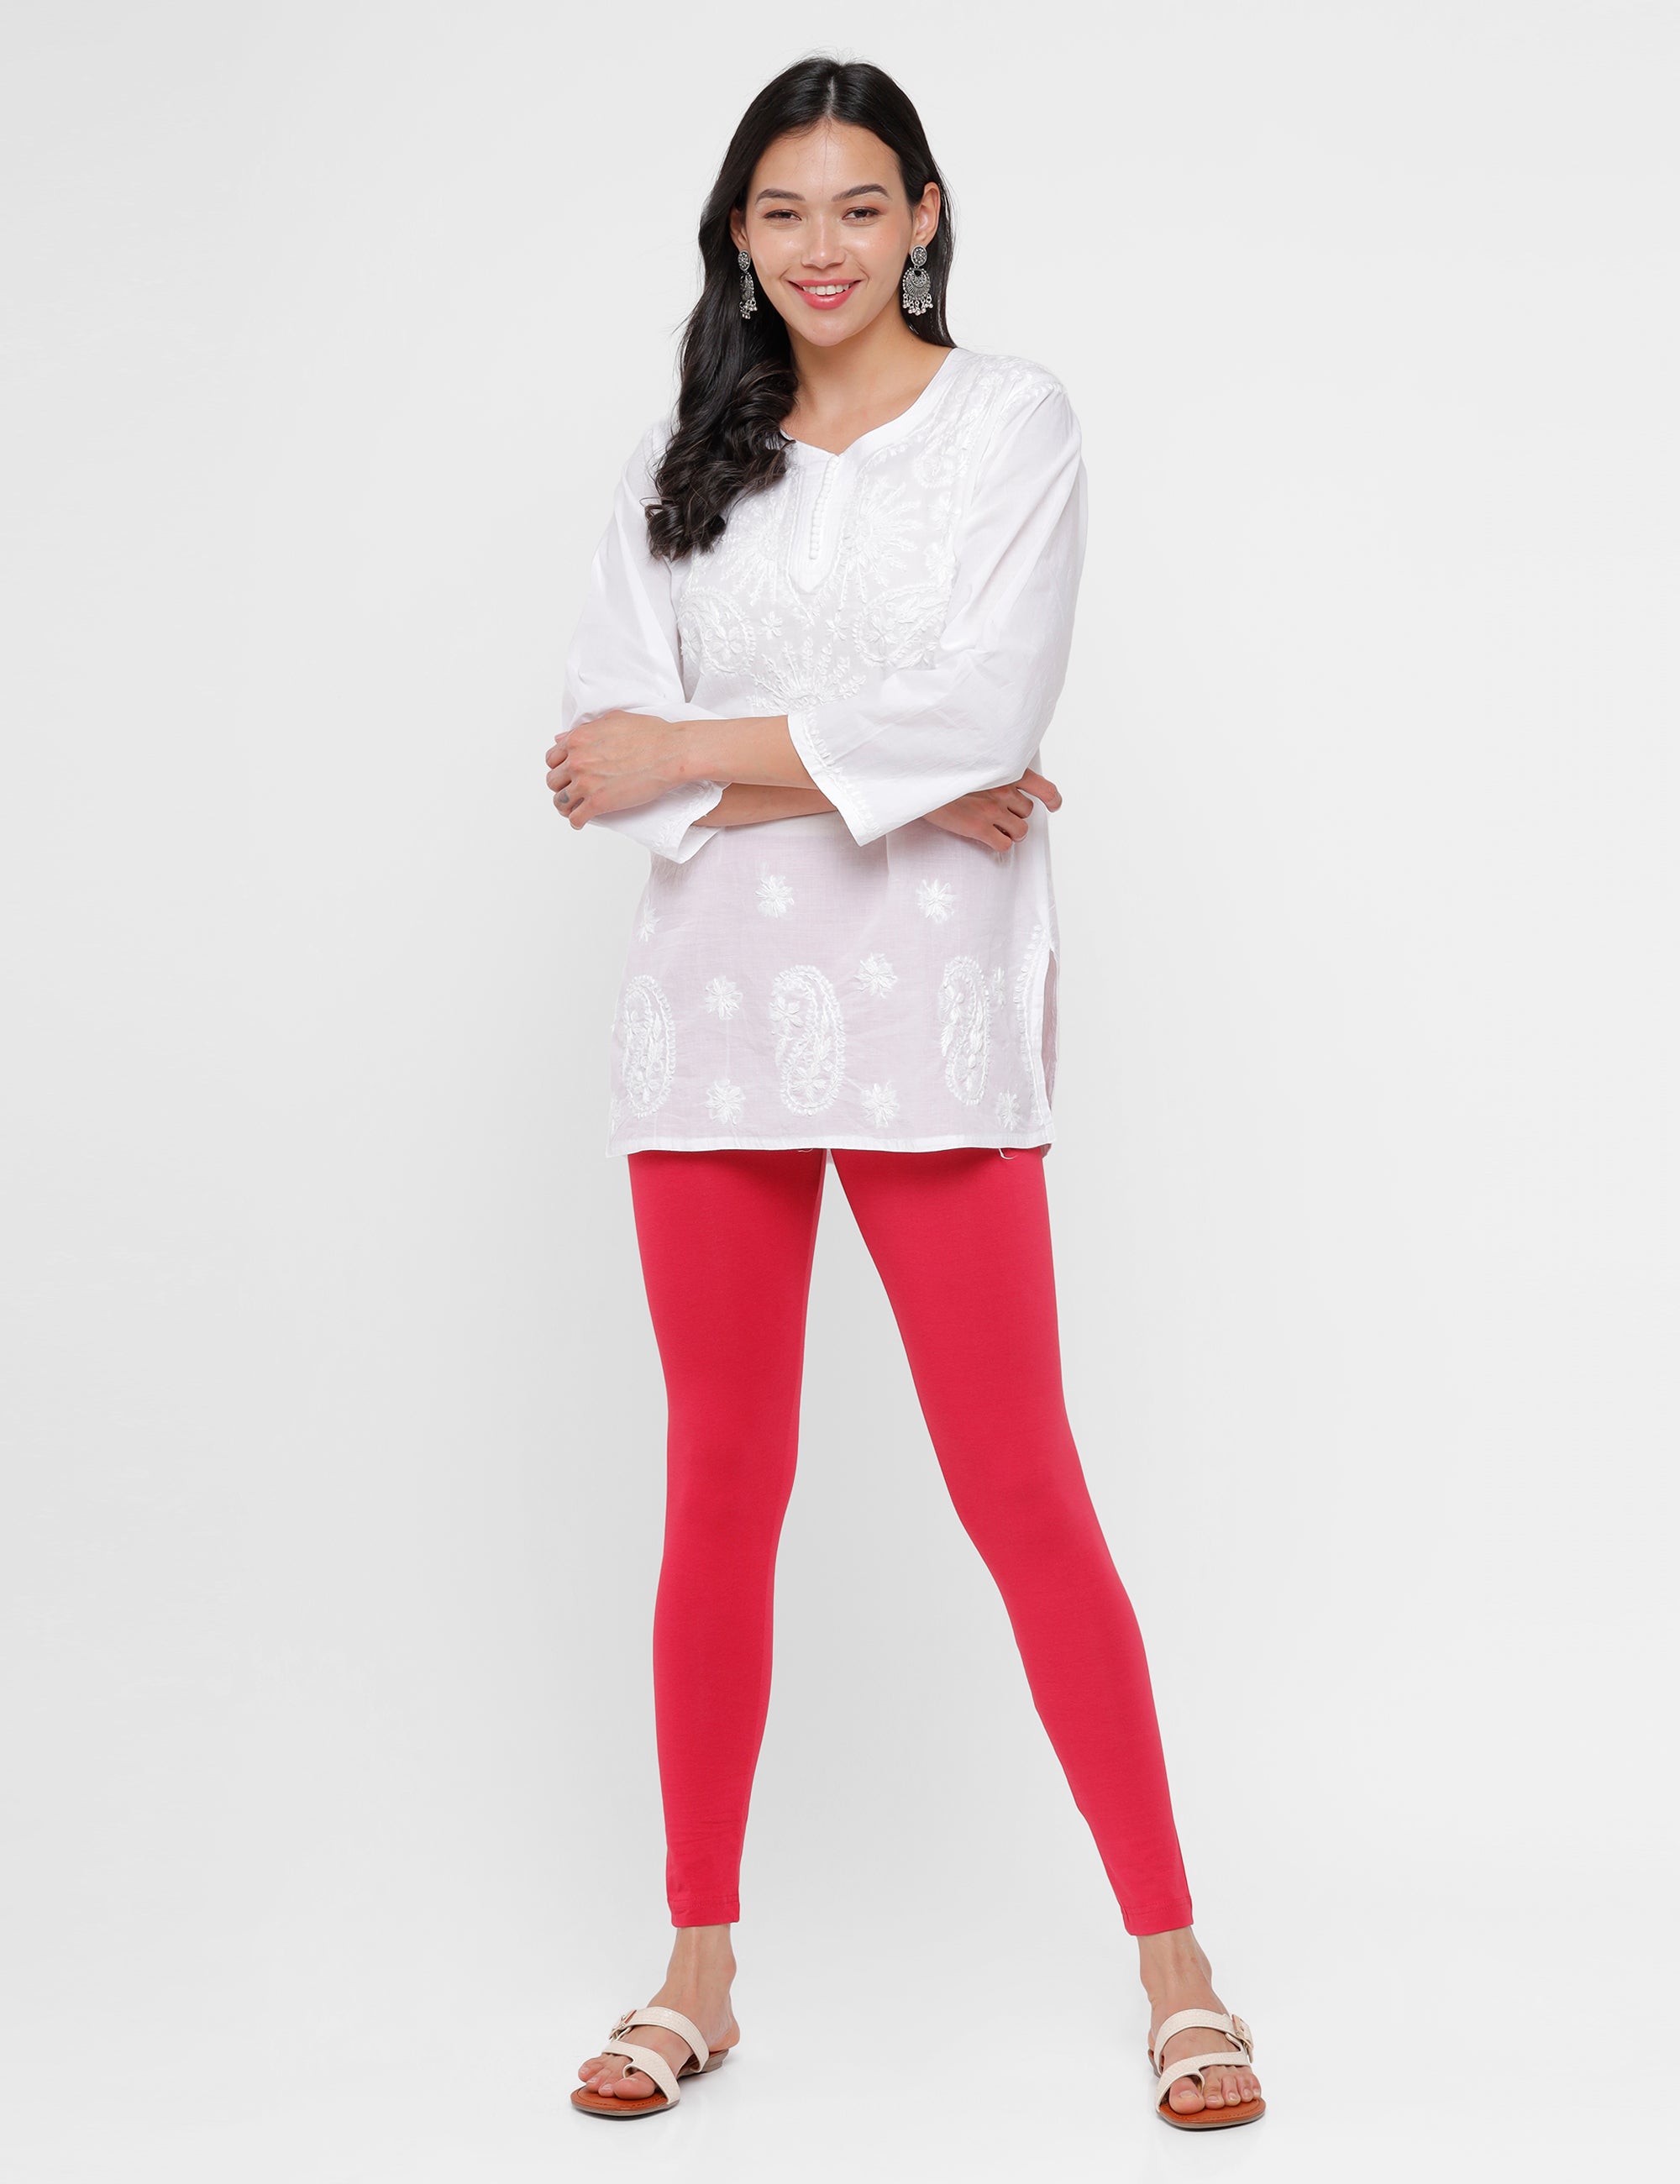 Buy POWERZONE Cotton Women's 2 Way Chudidar Leggings, Size: X-Large (Dark  Pink) at Amazon.in